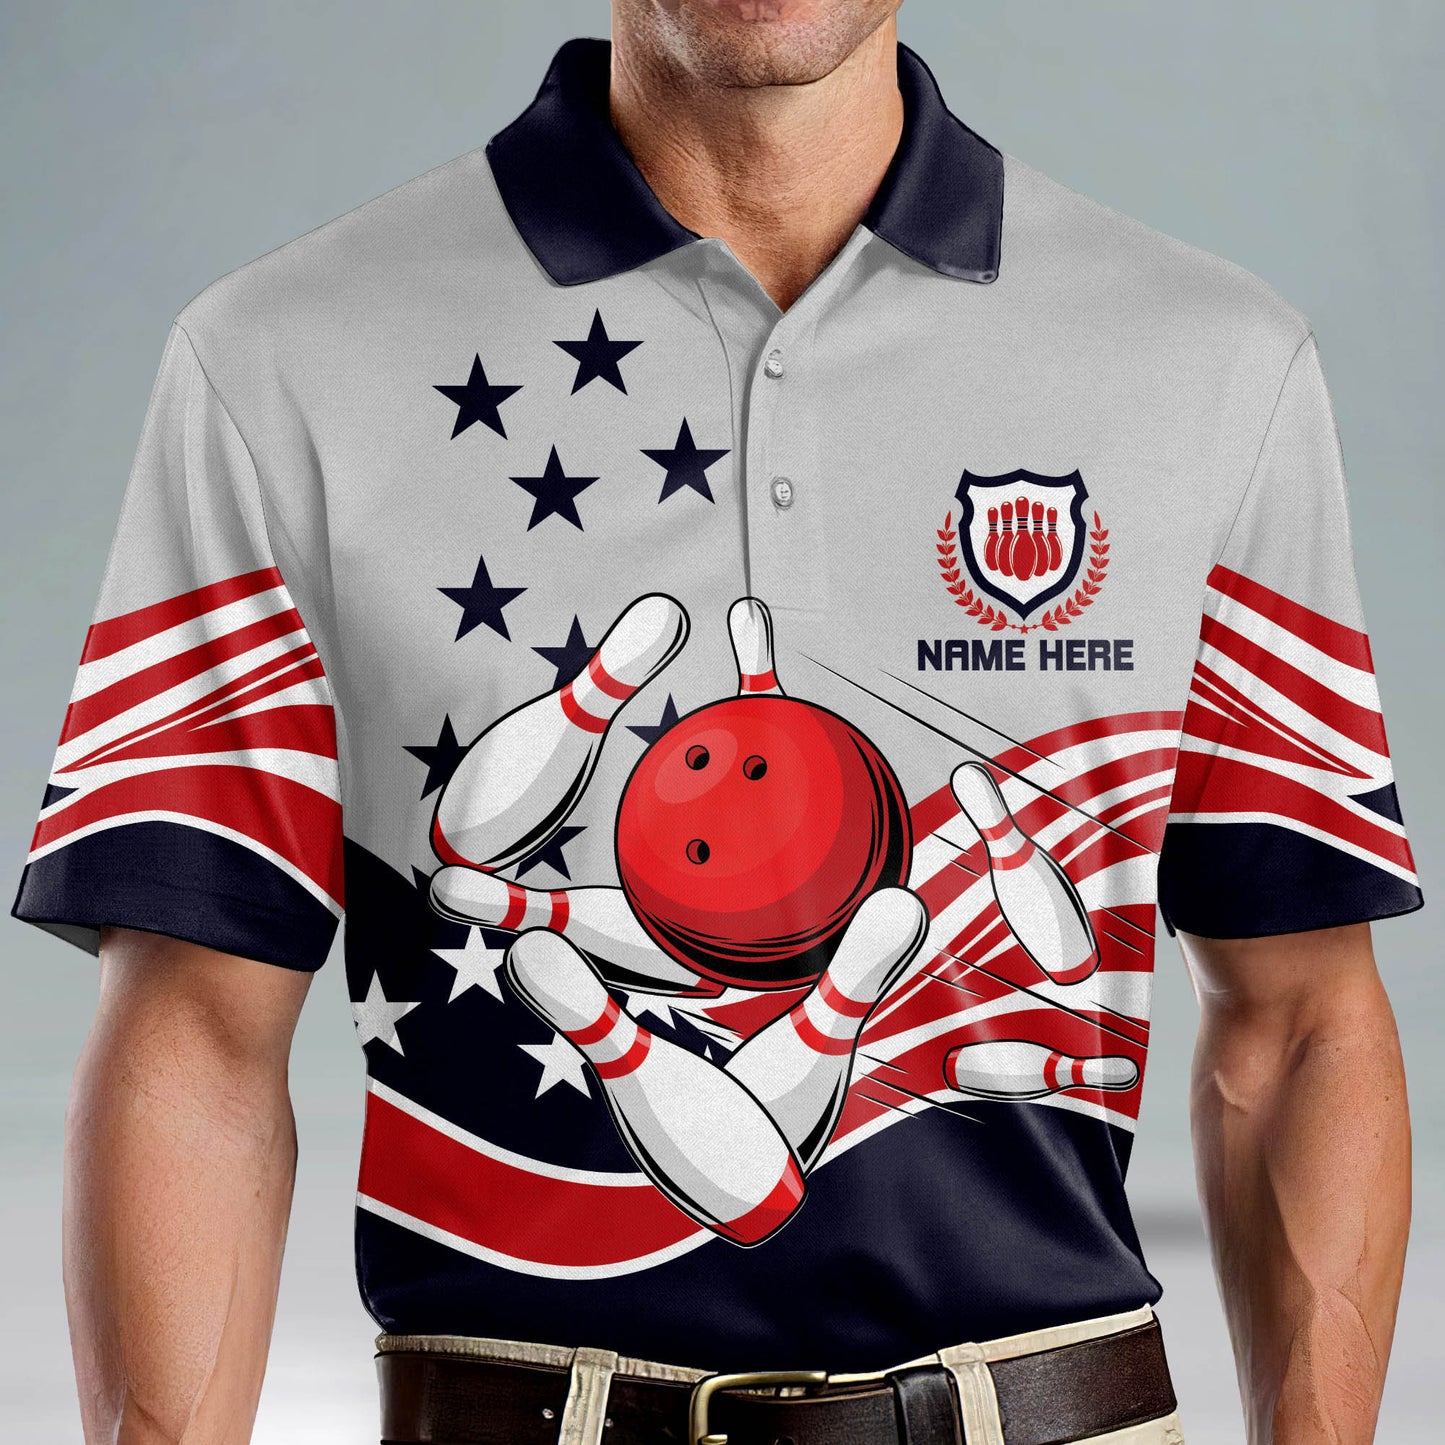 Custom Bowling Shirts For Men - Men's Custom Bowling Team Shirts - Crazy Cool Designer Bowling Shirt - American Flag Short Sleeve Bowling Shirts Mens BM0088